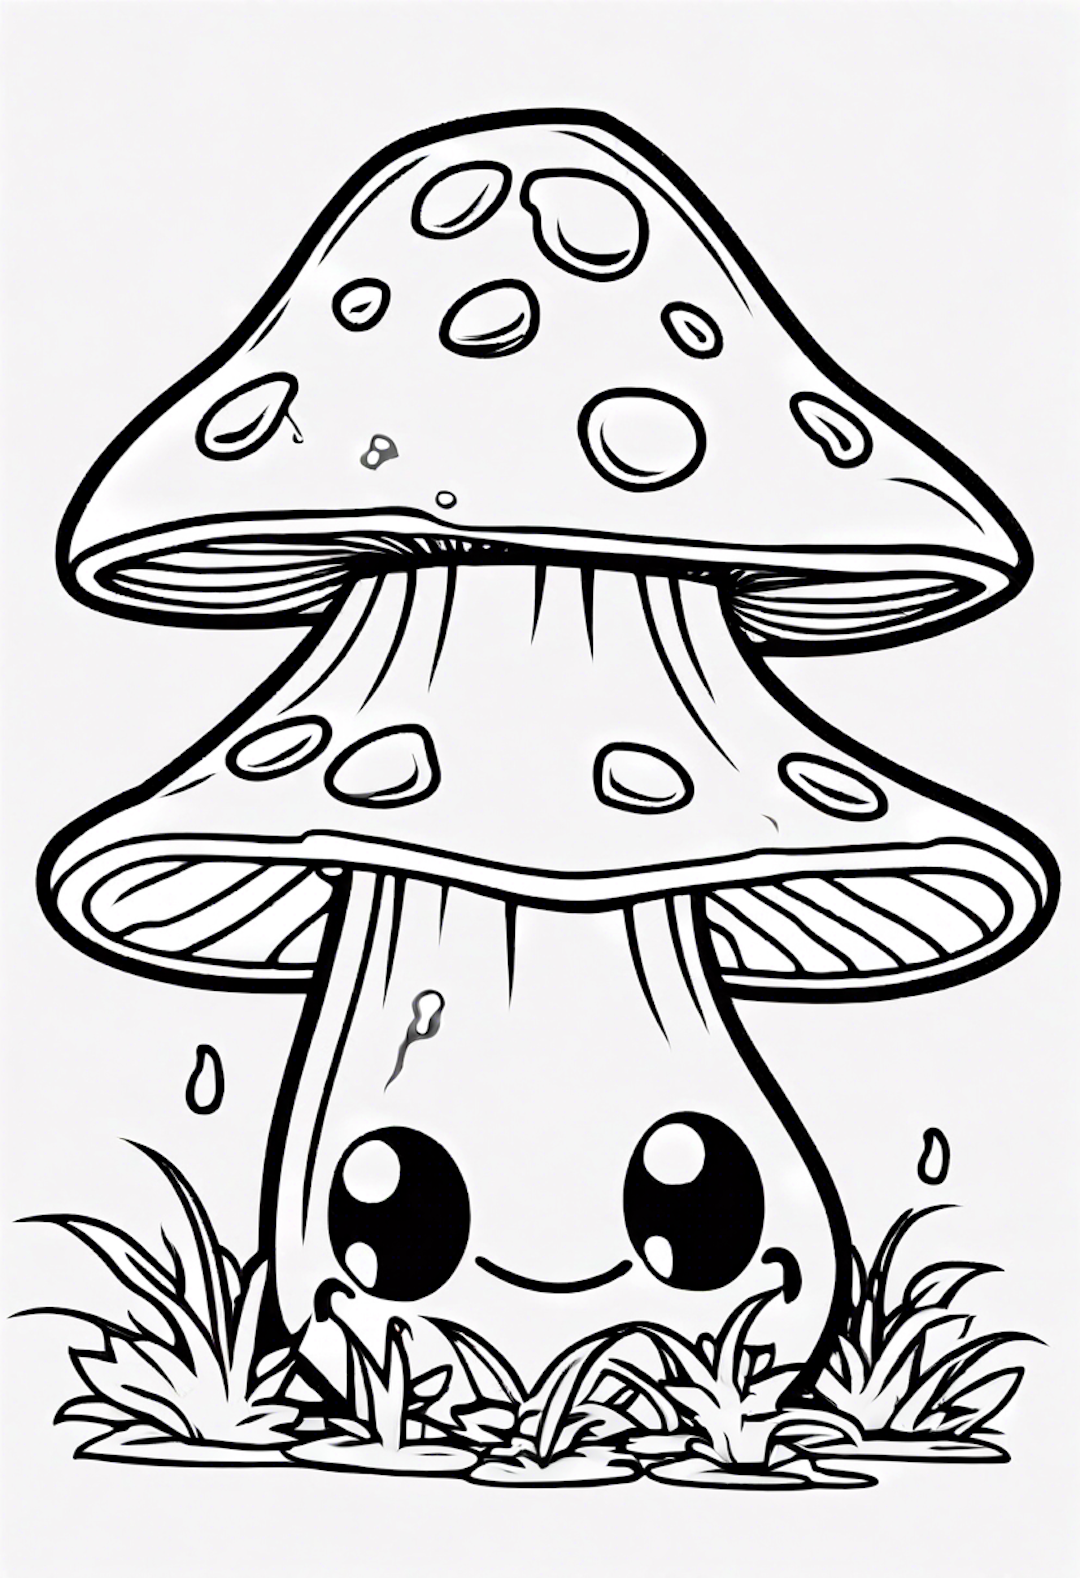 A Cartoon Mushroom Cooking